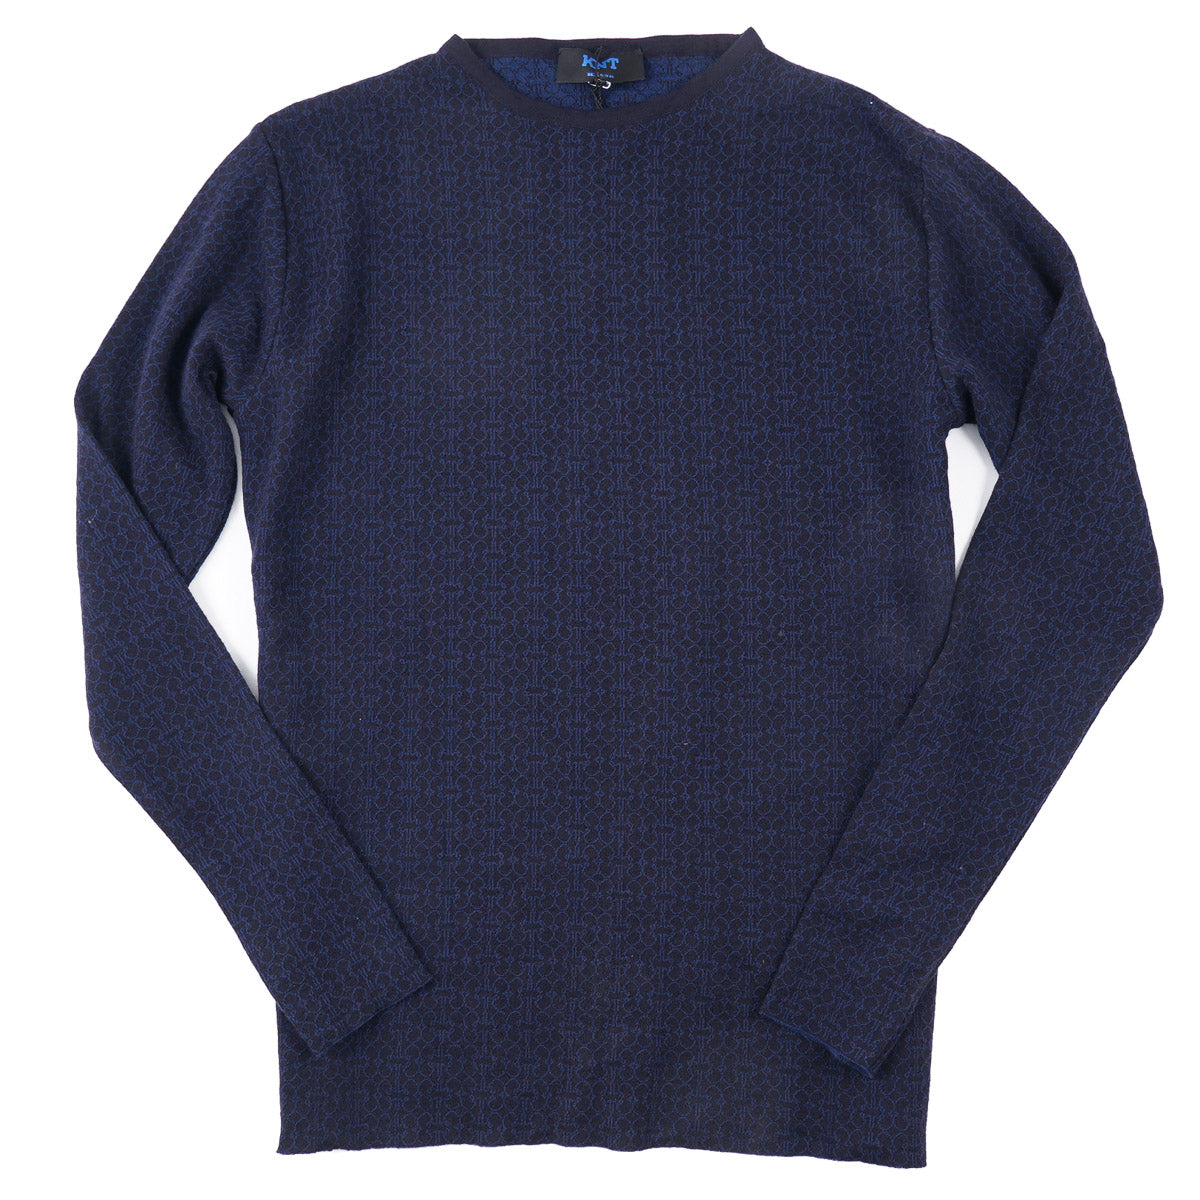 Kiton KNT Patterned Cotton Sweater - Top Shelf Apparel